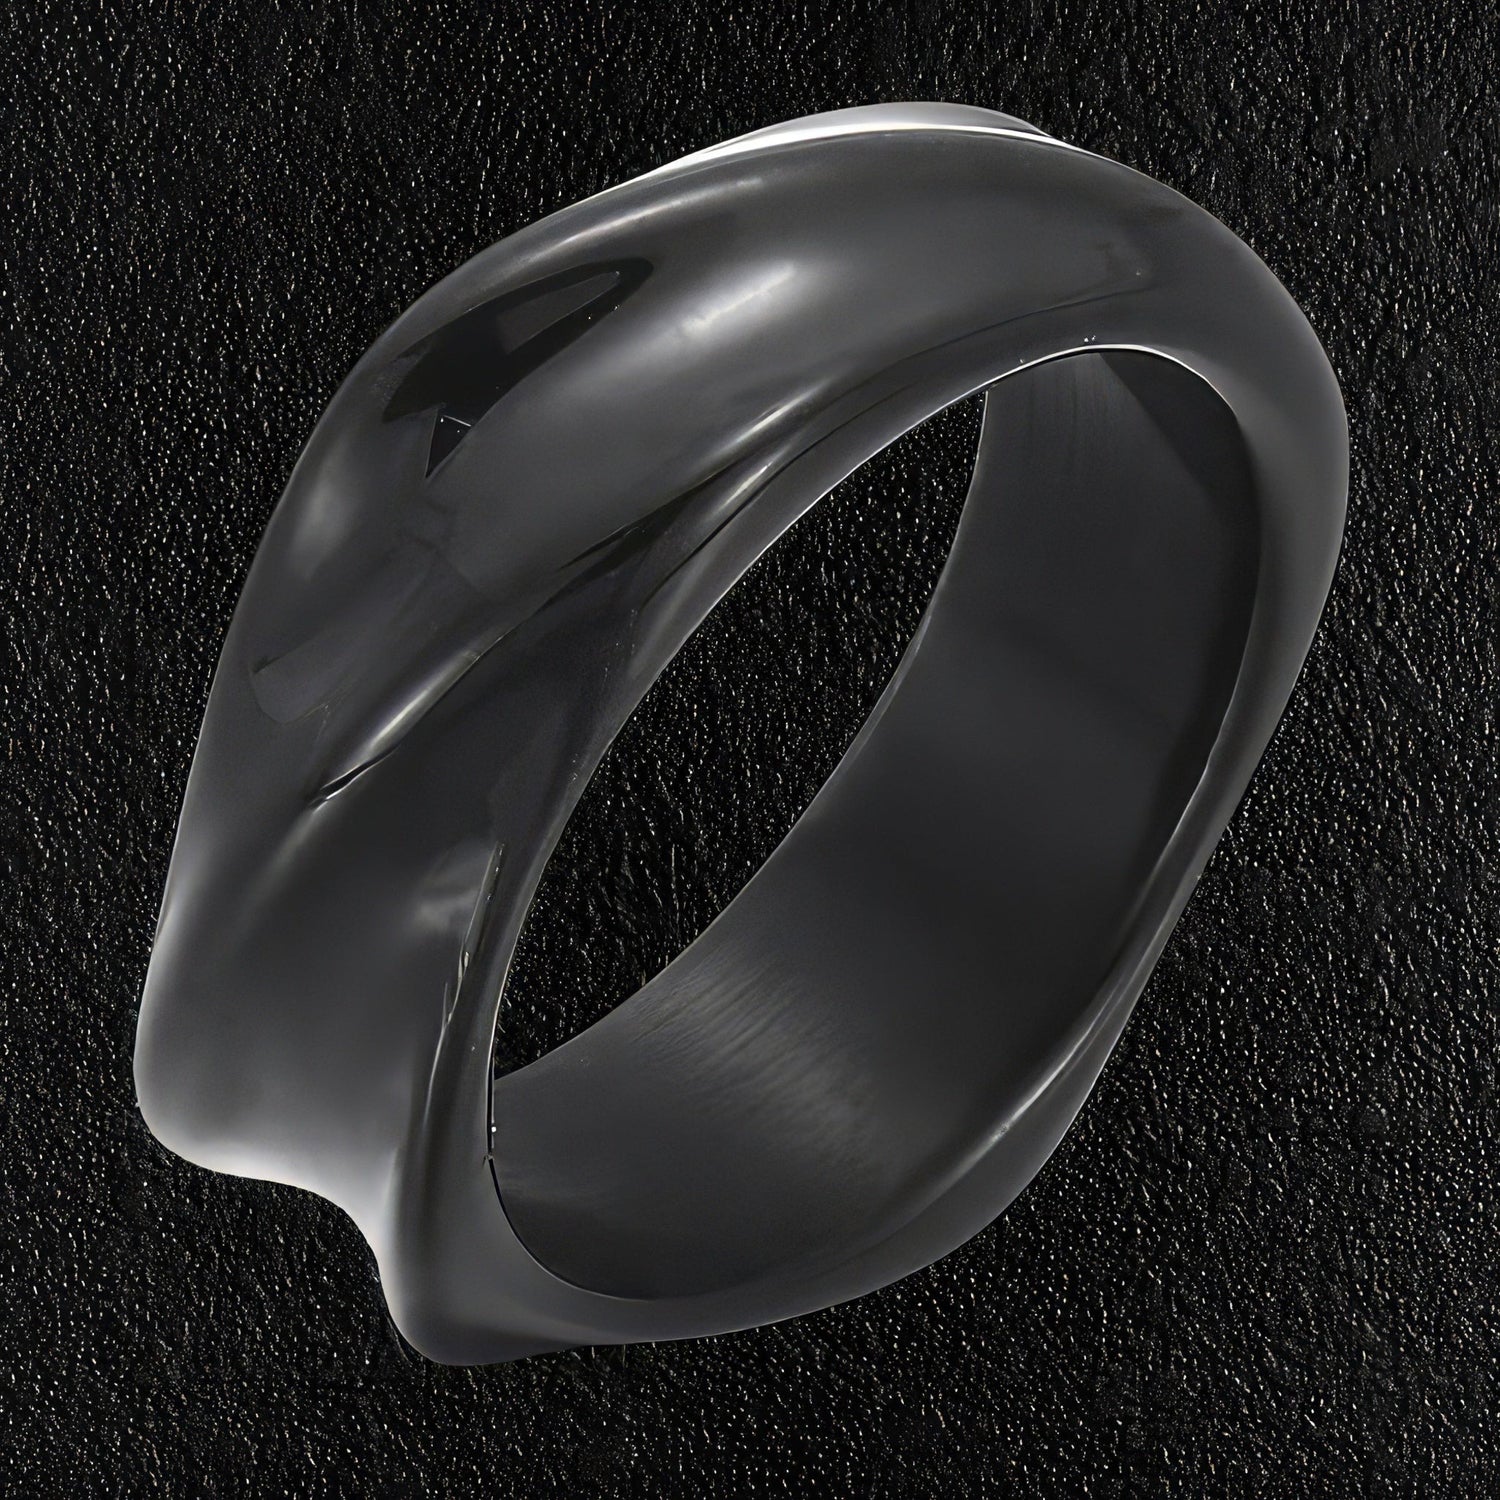 The Big Black Kahuna Ring